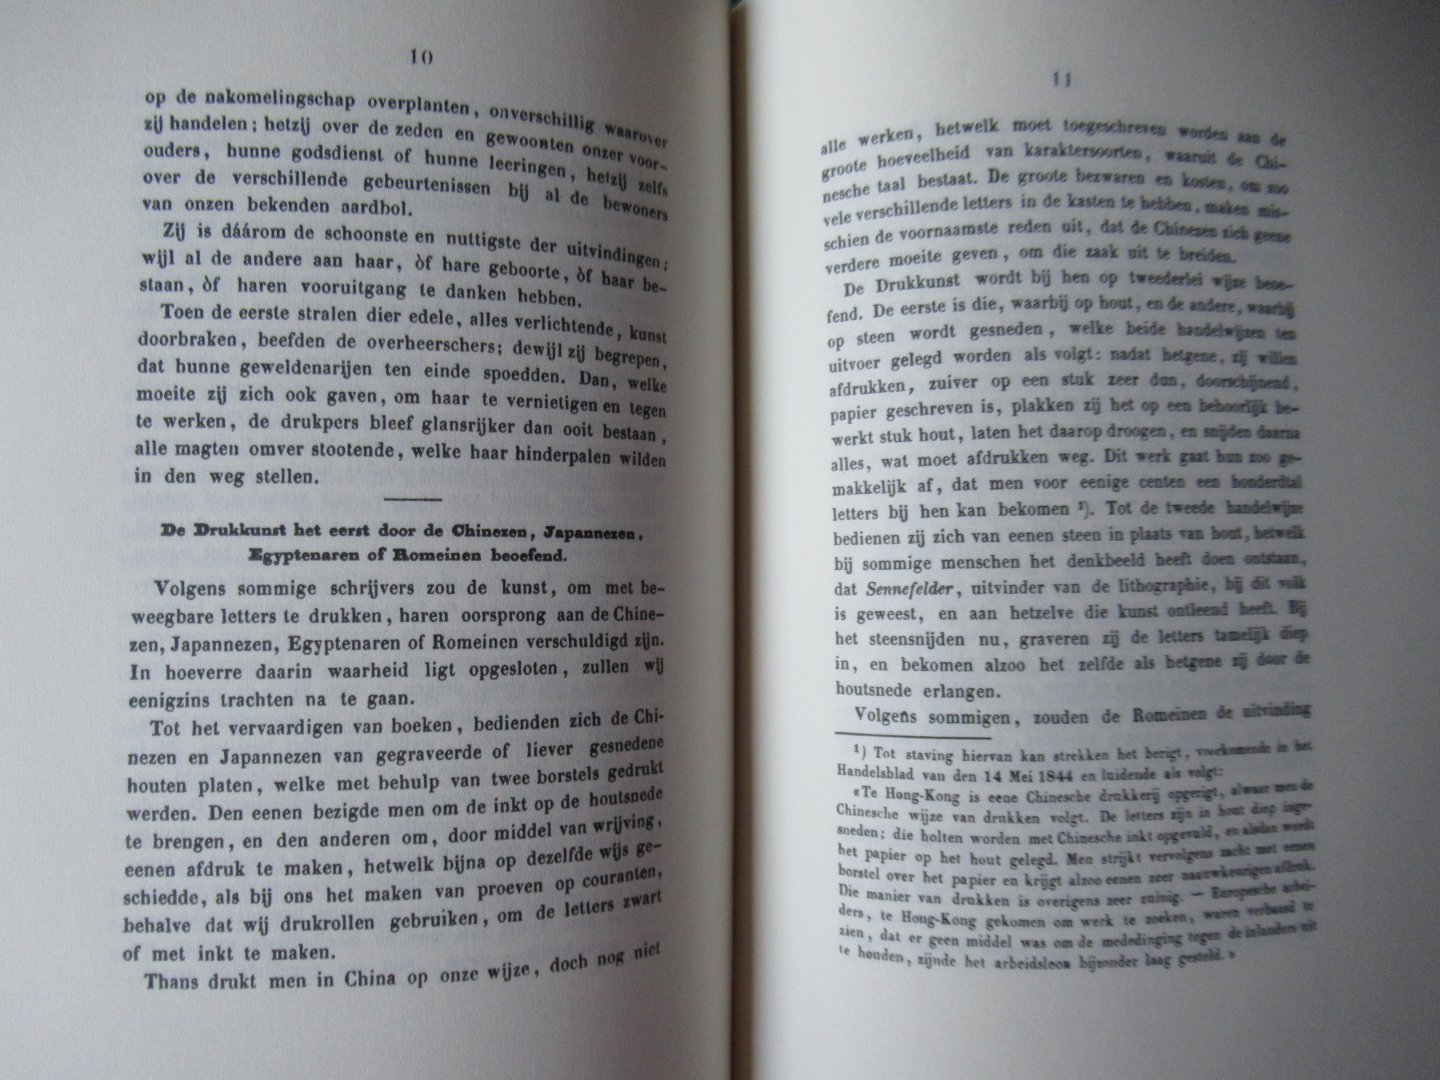 Cleef Jzn, Pieter Marius van - Handboek ter beoefening der boekdrukkunst in Nederland 1844